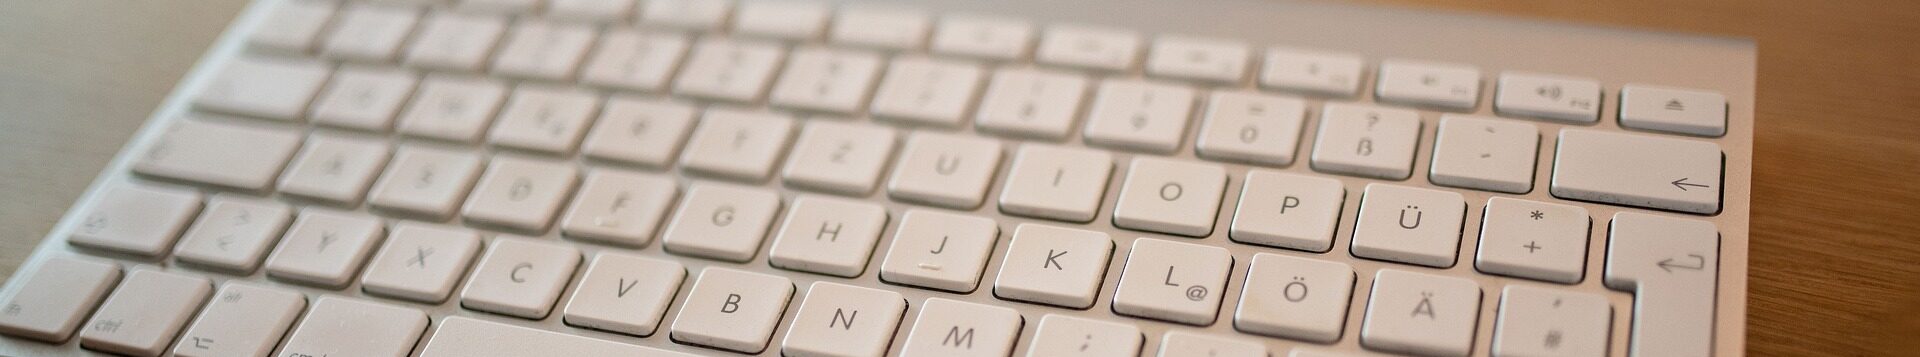 Symbolbild: Tastatur